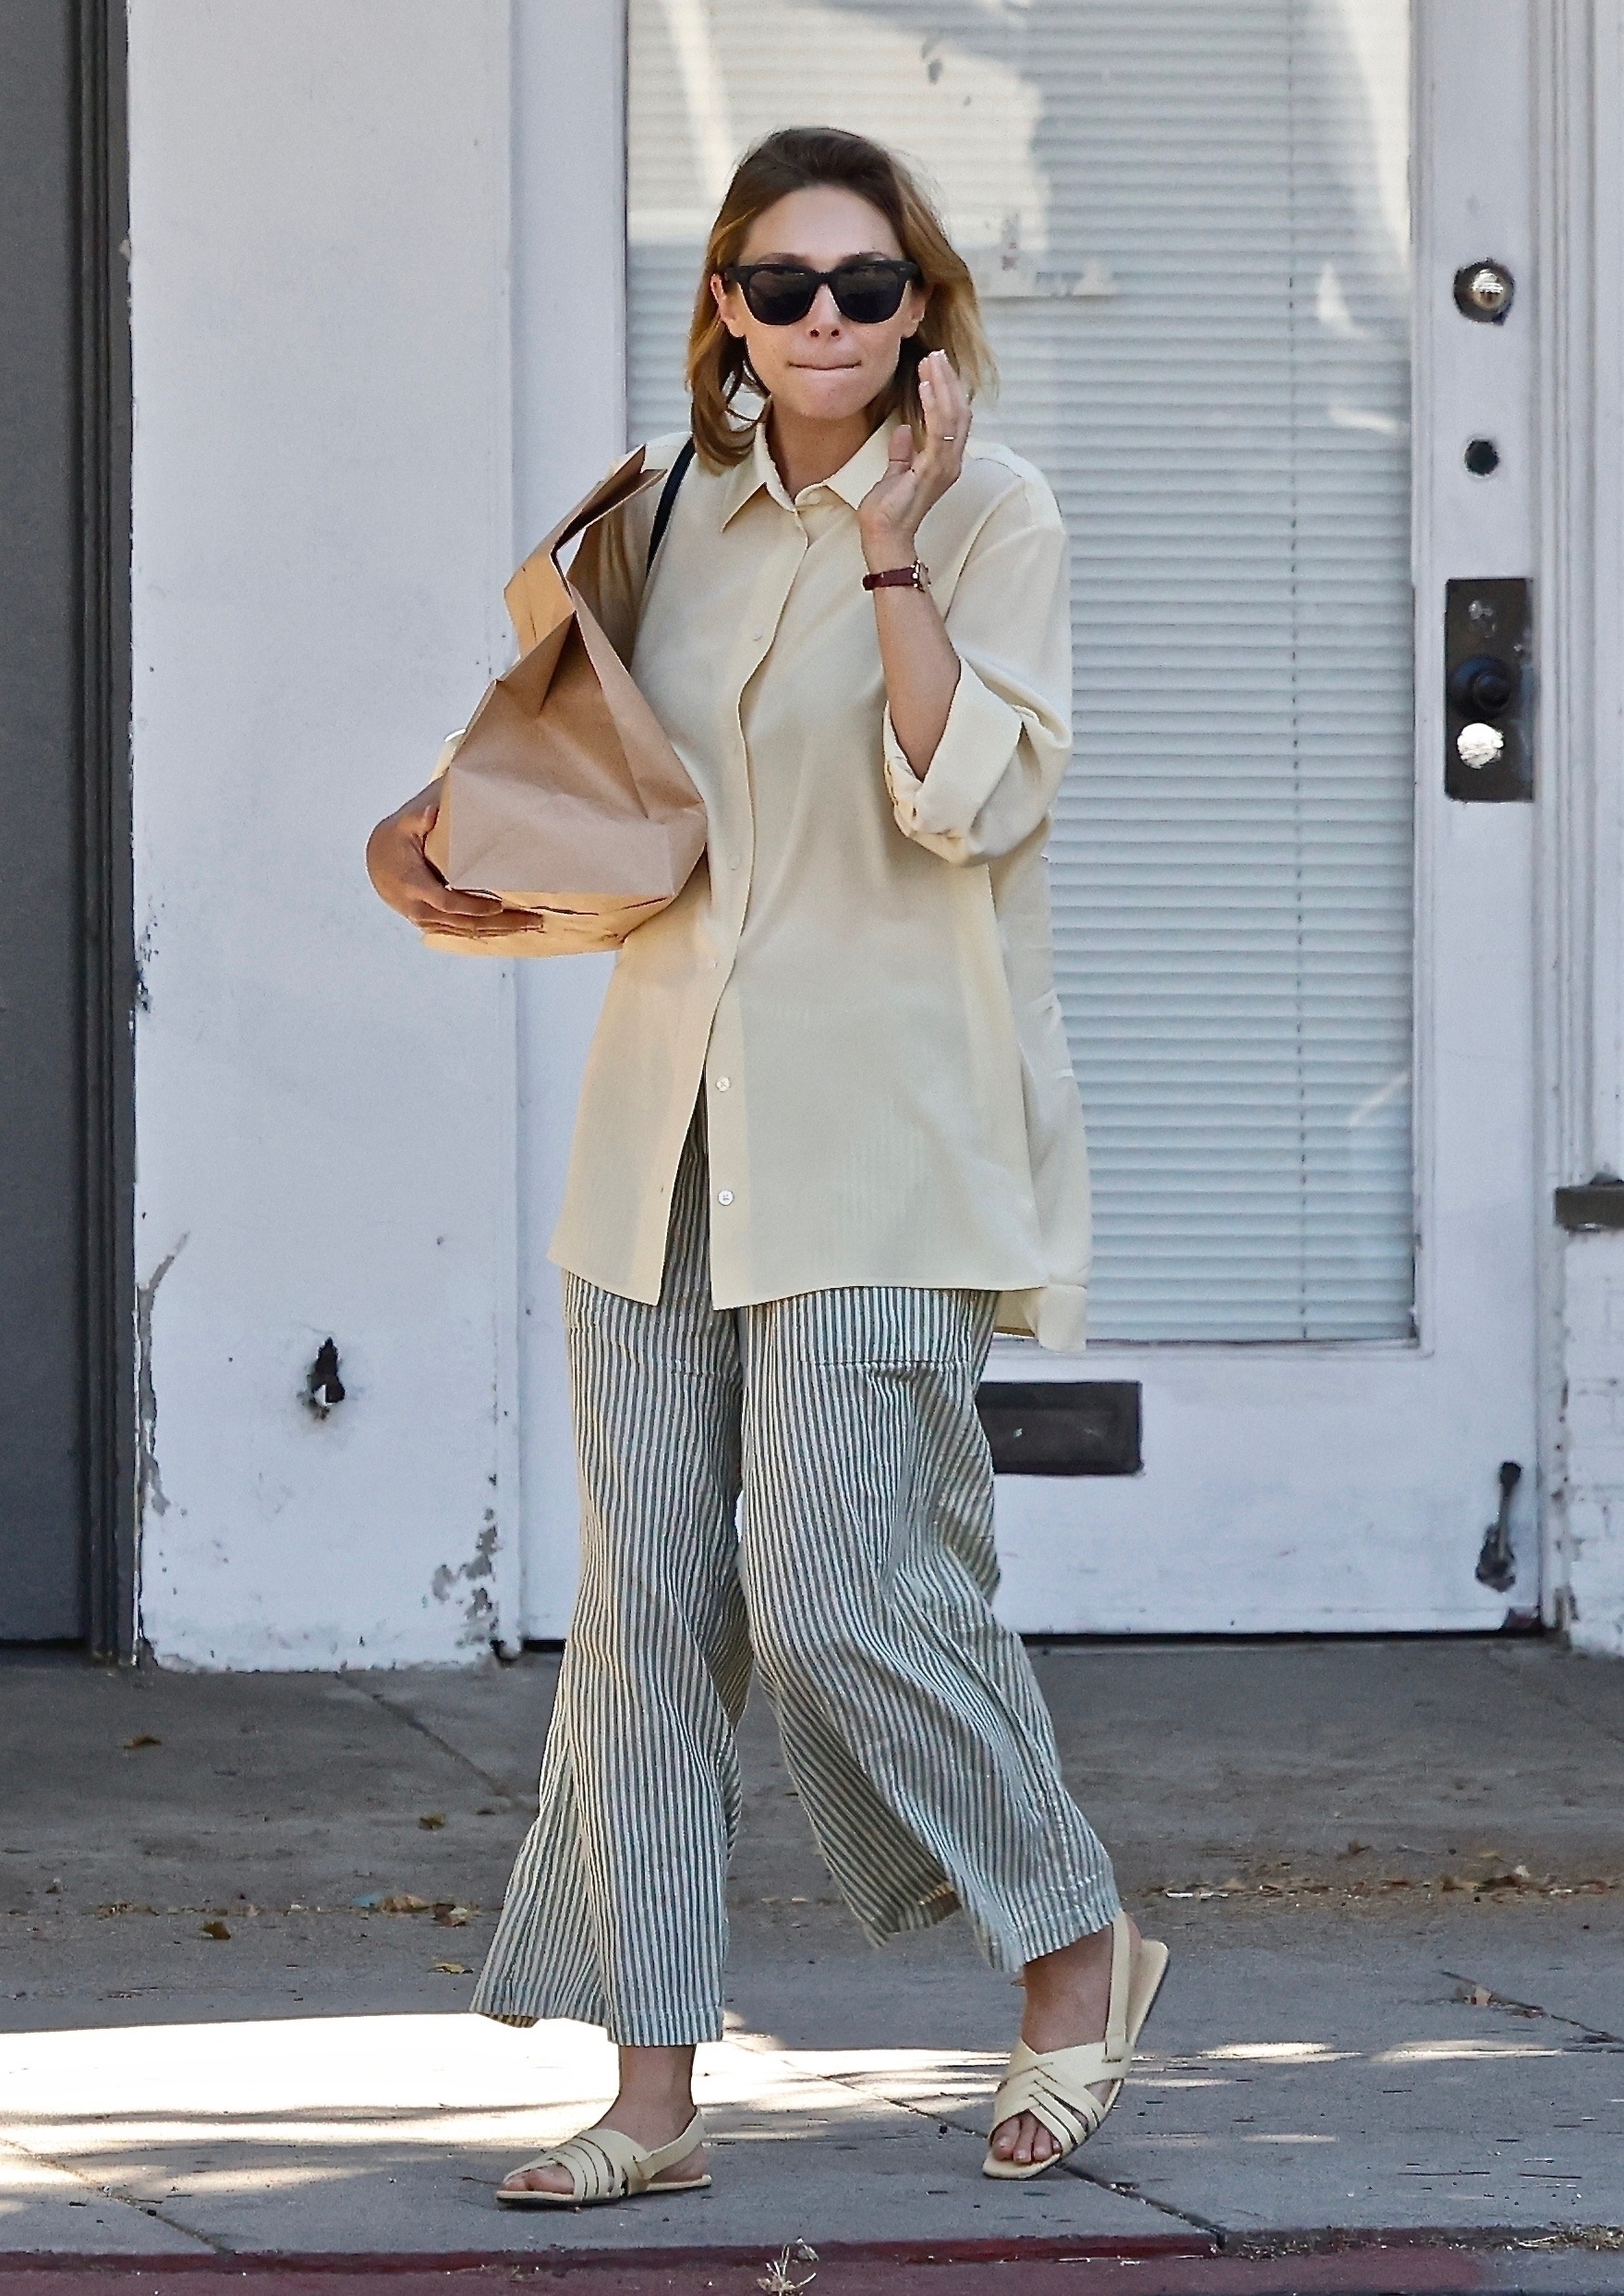 Kaia Gerber Embraces the New Season with Louis Vuitton Twist Bags